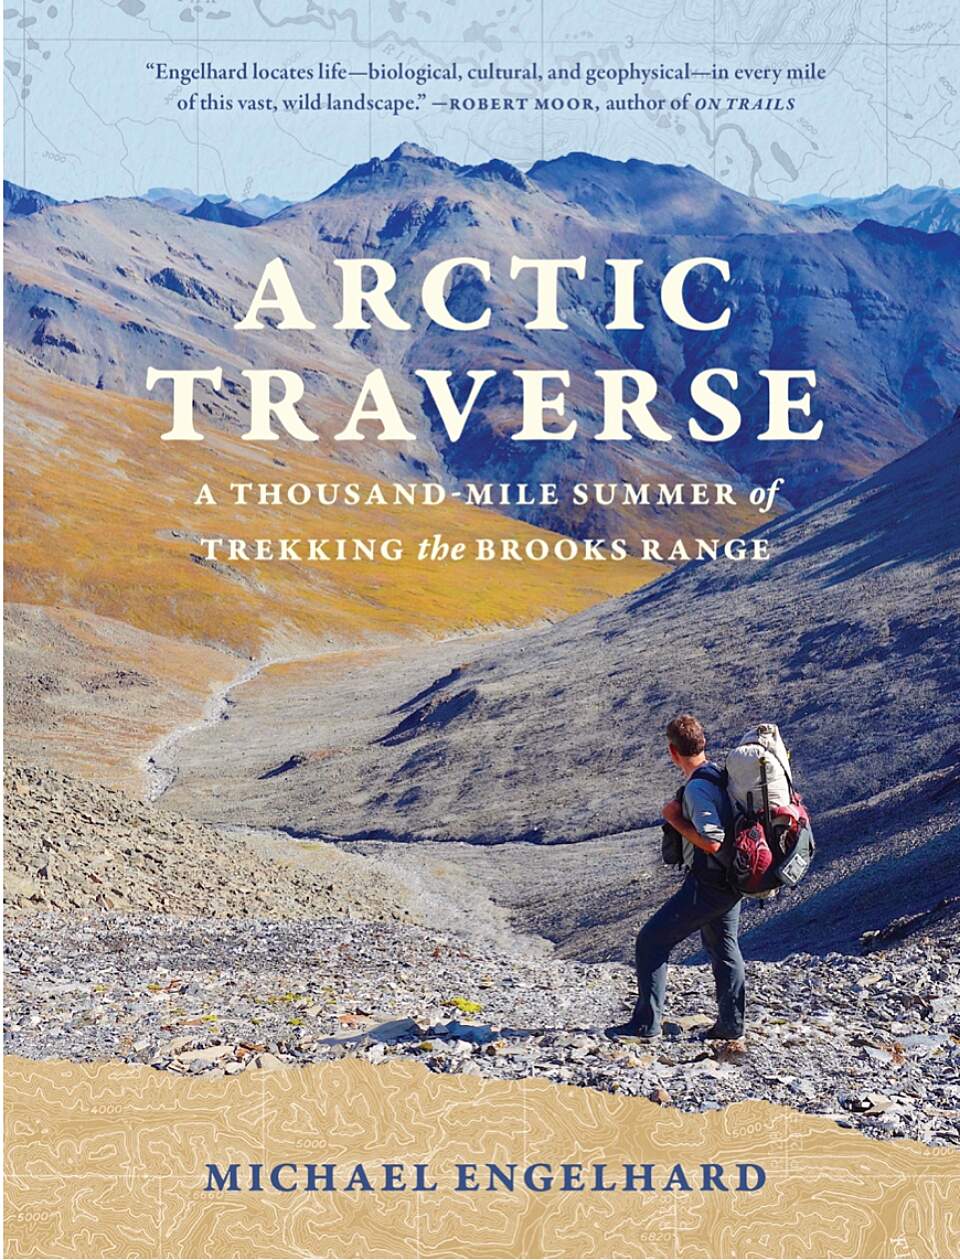 Arctic Traverse: A Thousand-Mile Summer of Trekking the Brooks Range by Michael Engelhard